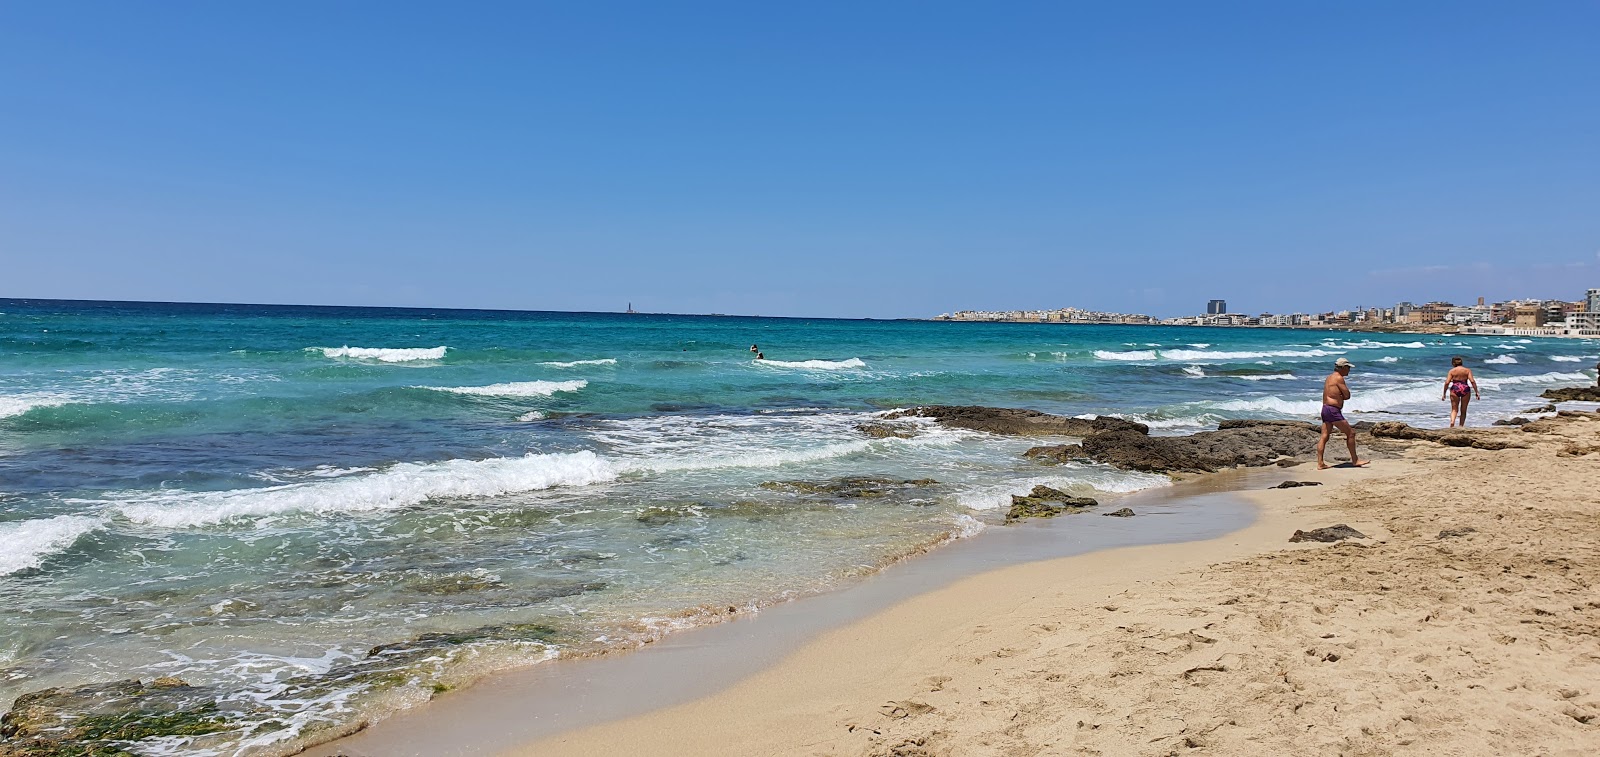 Foto av Spiaggia Gallipoli med blå rent vatten yta